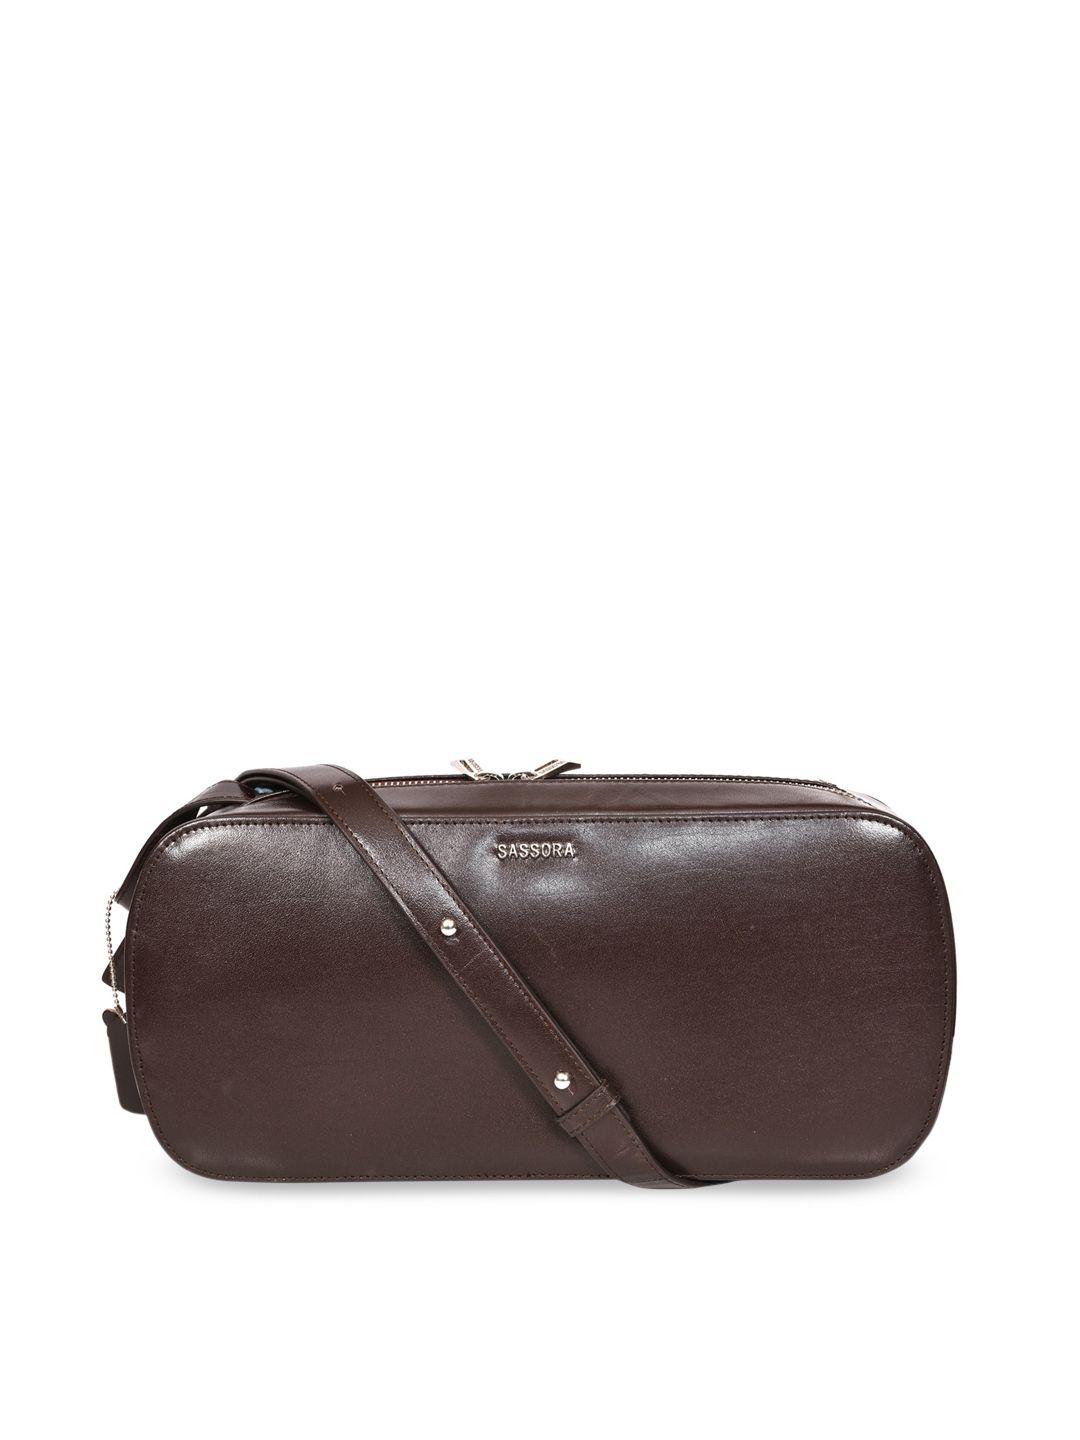 sassora brown leather oversized bowling sling bag